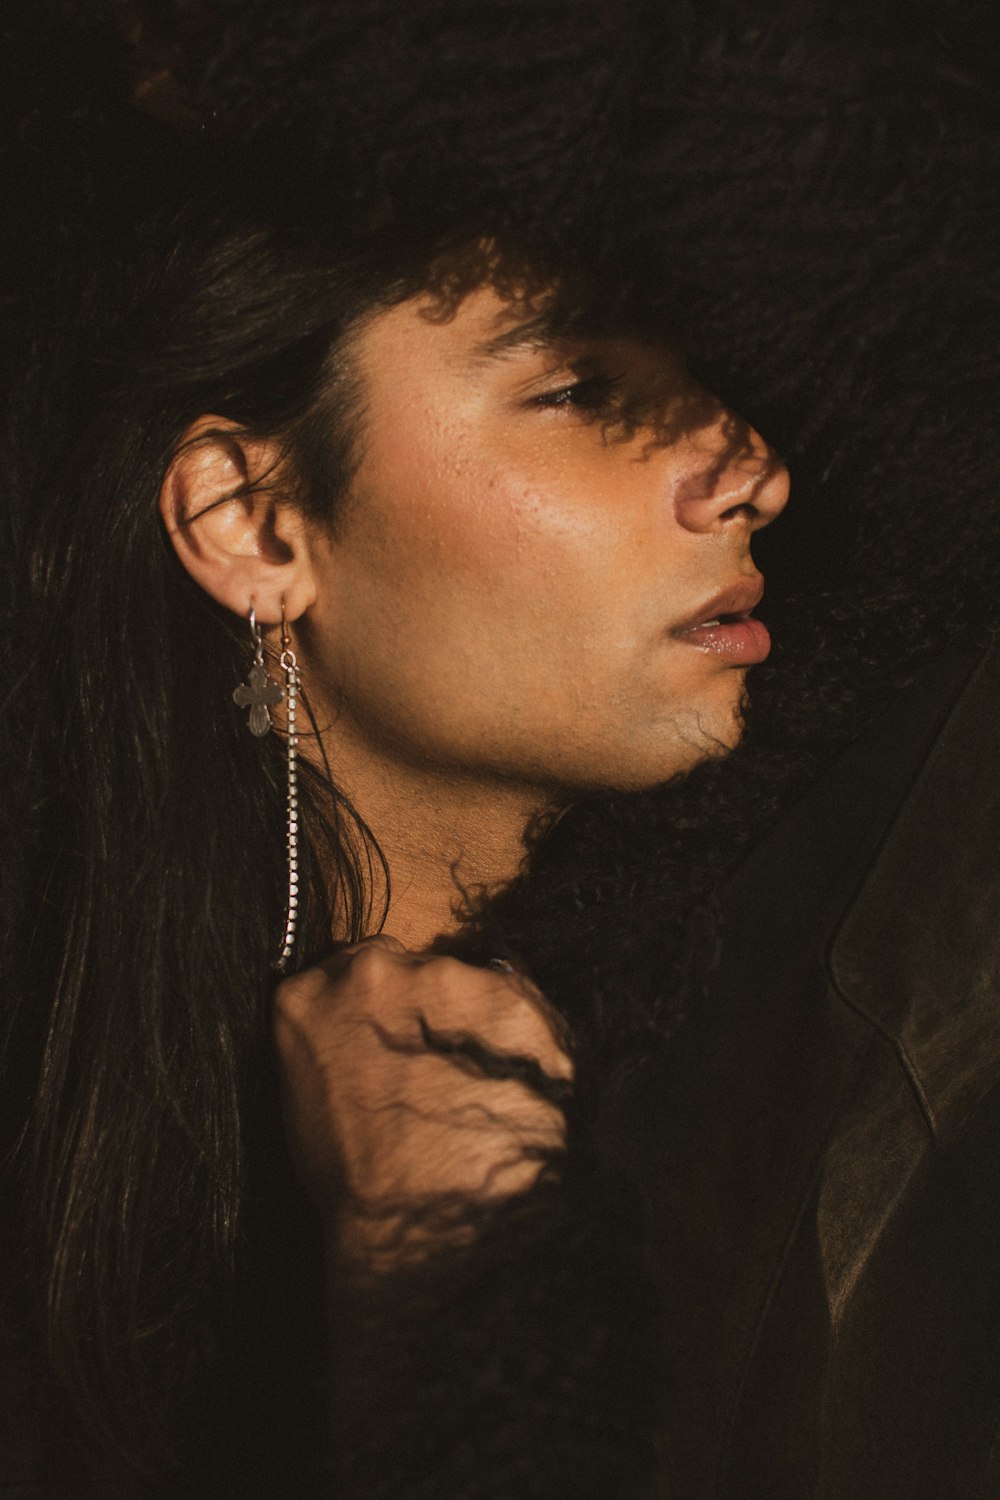 a woman with long black hair wearing earrings